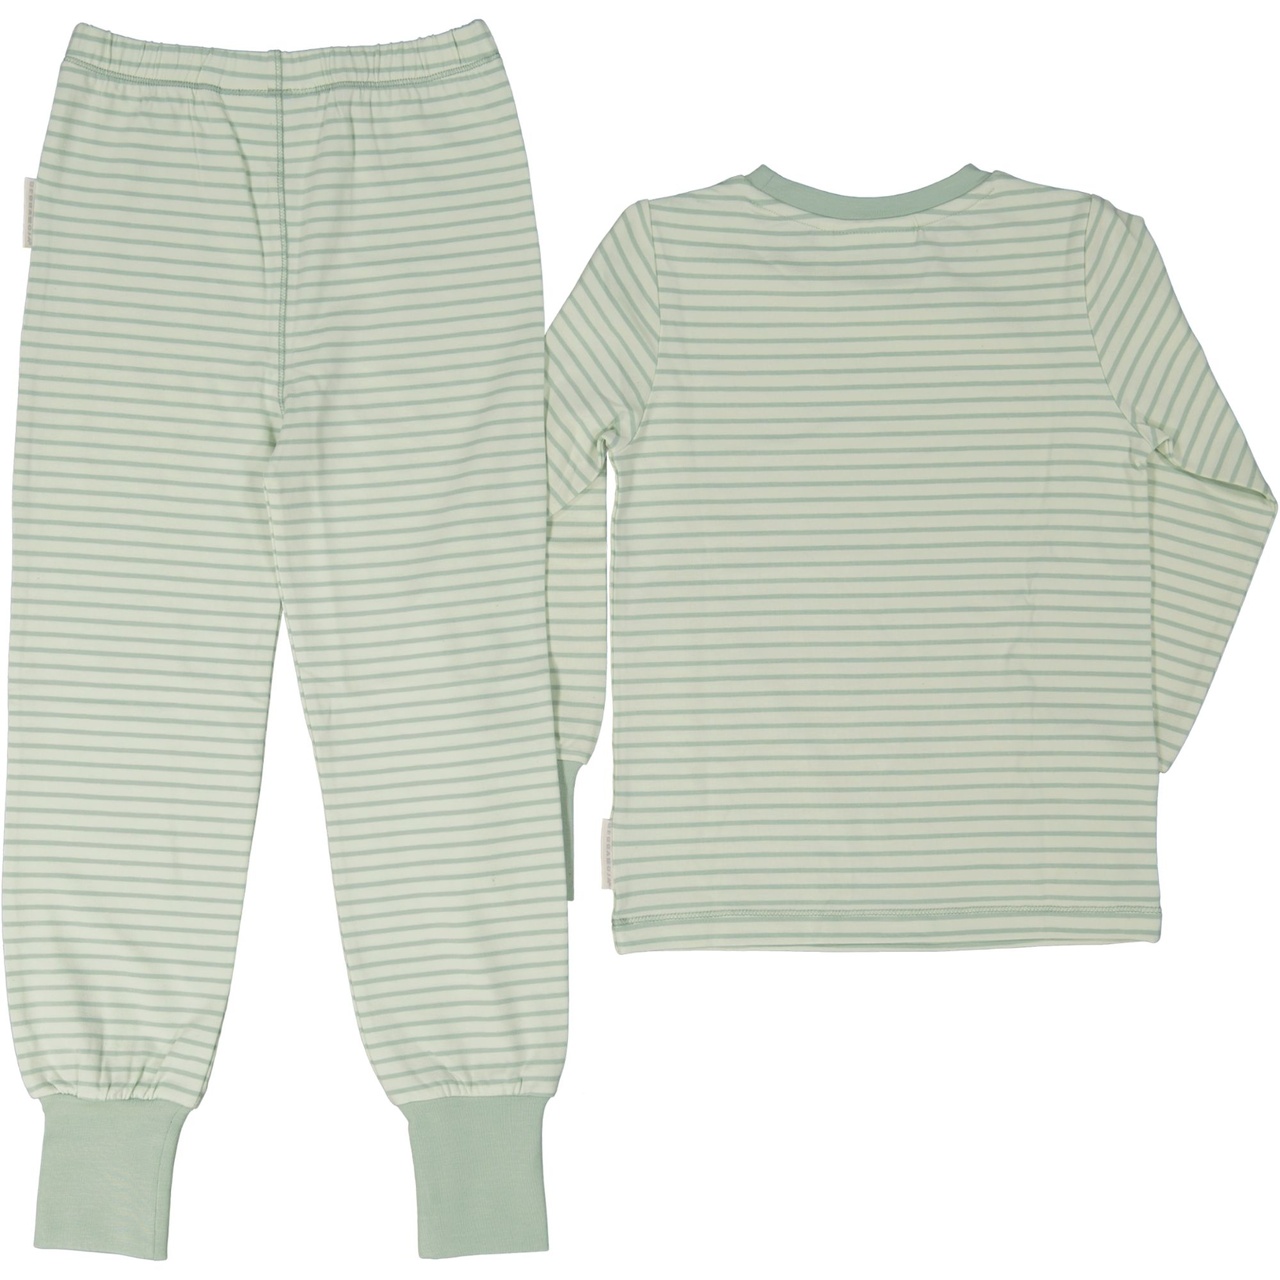 Two pcs pyjamas Classic L.green/green  74/80